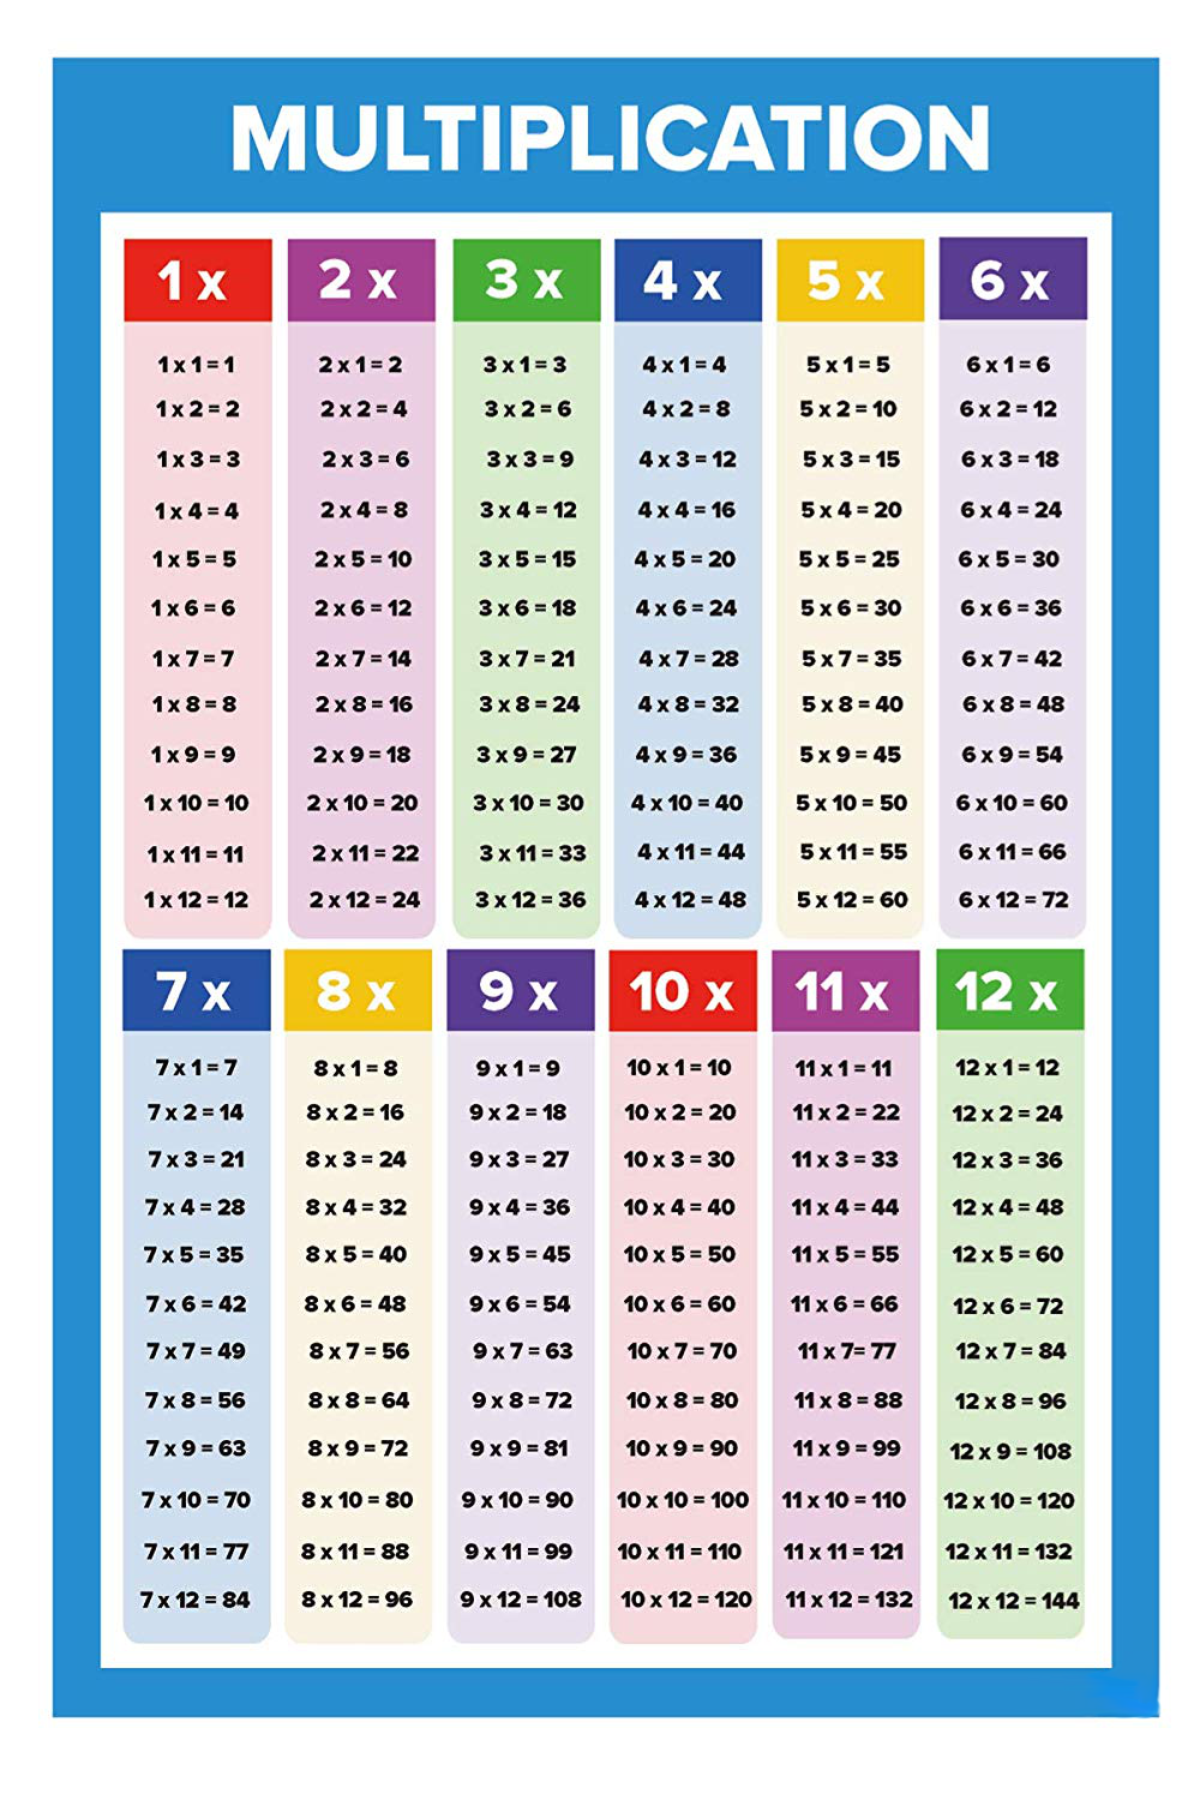 1-10 Multiplication Chart | PrintableMultiplication.com